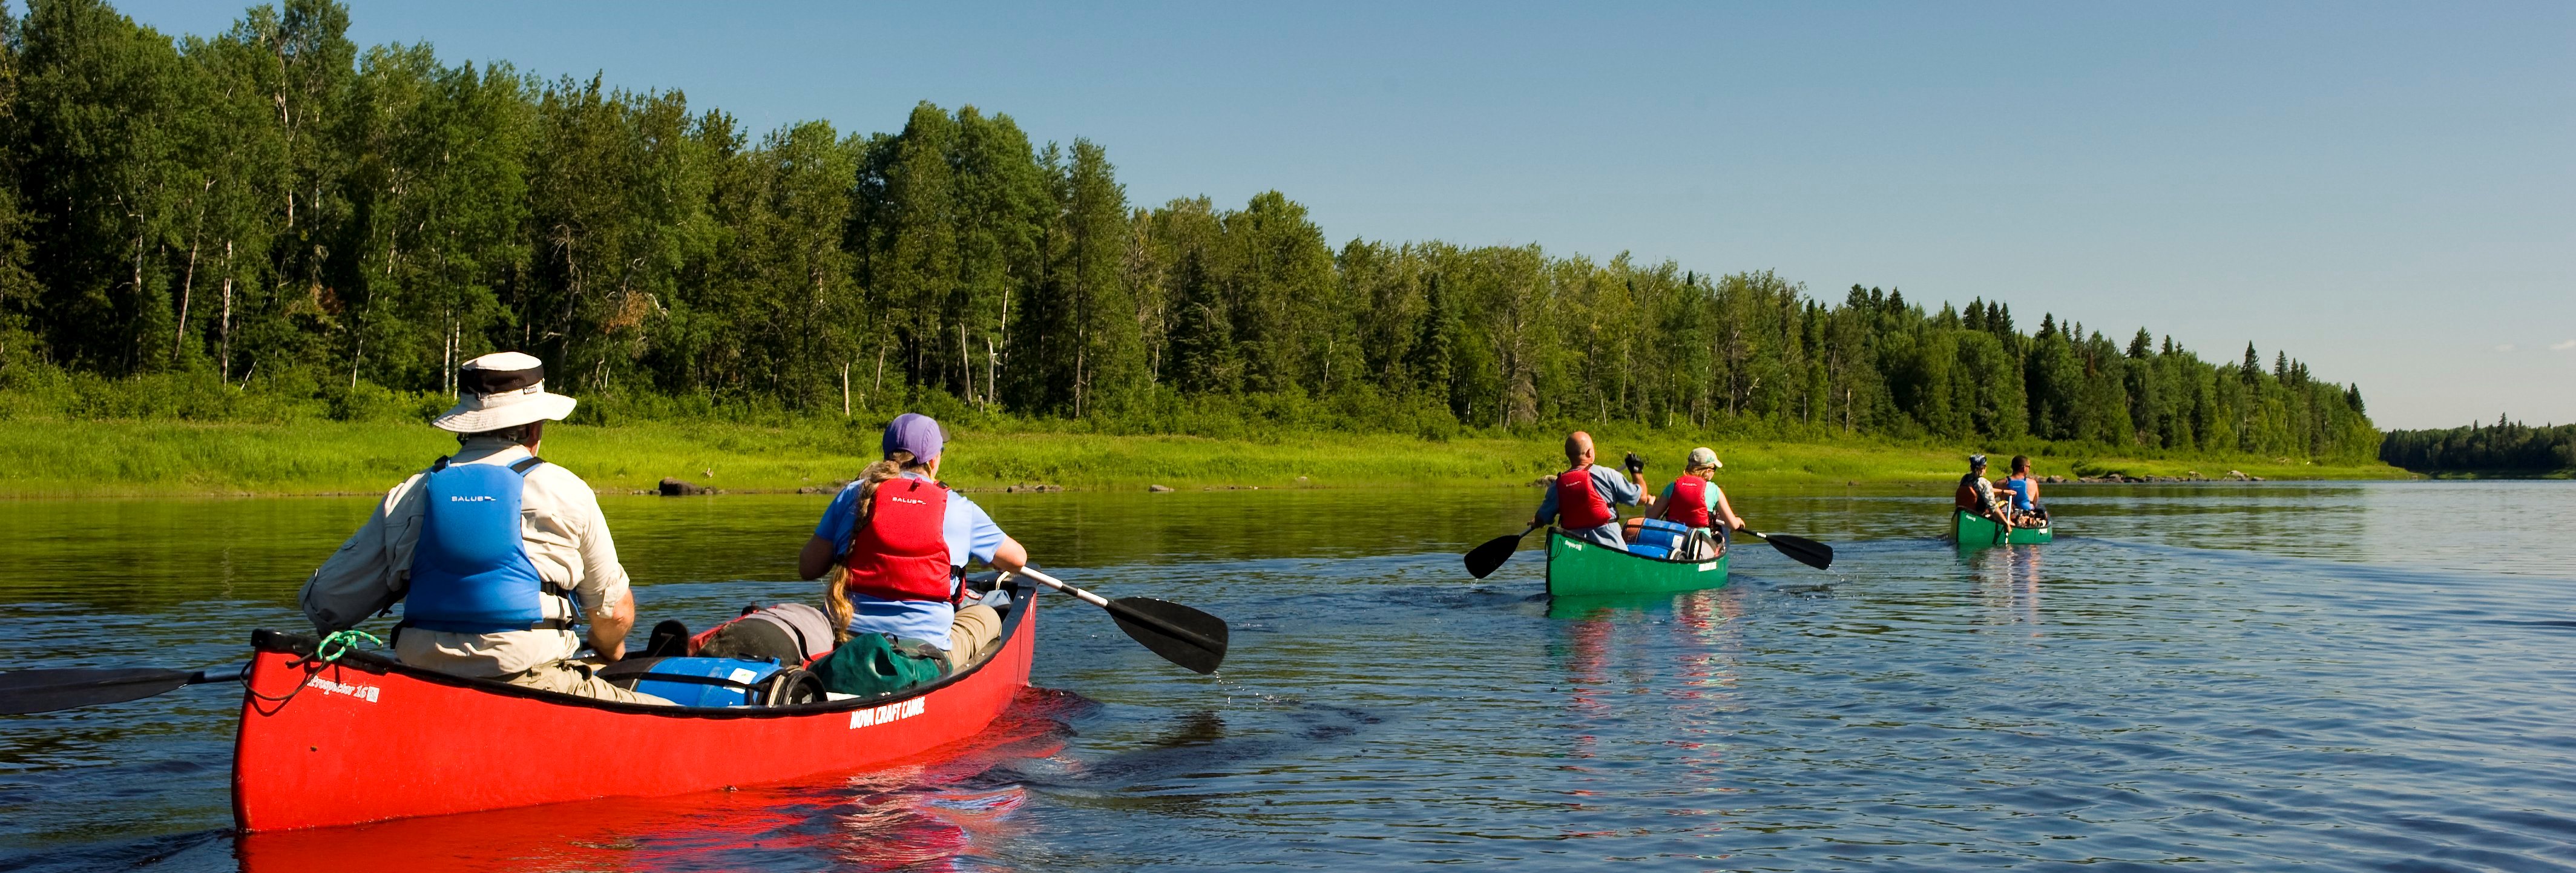 Canoe trip, photo credit Ontario Tourism